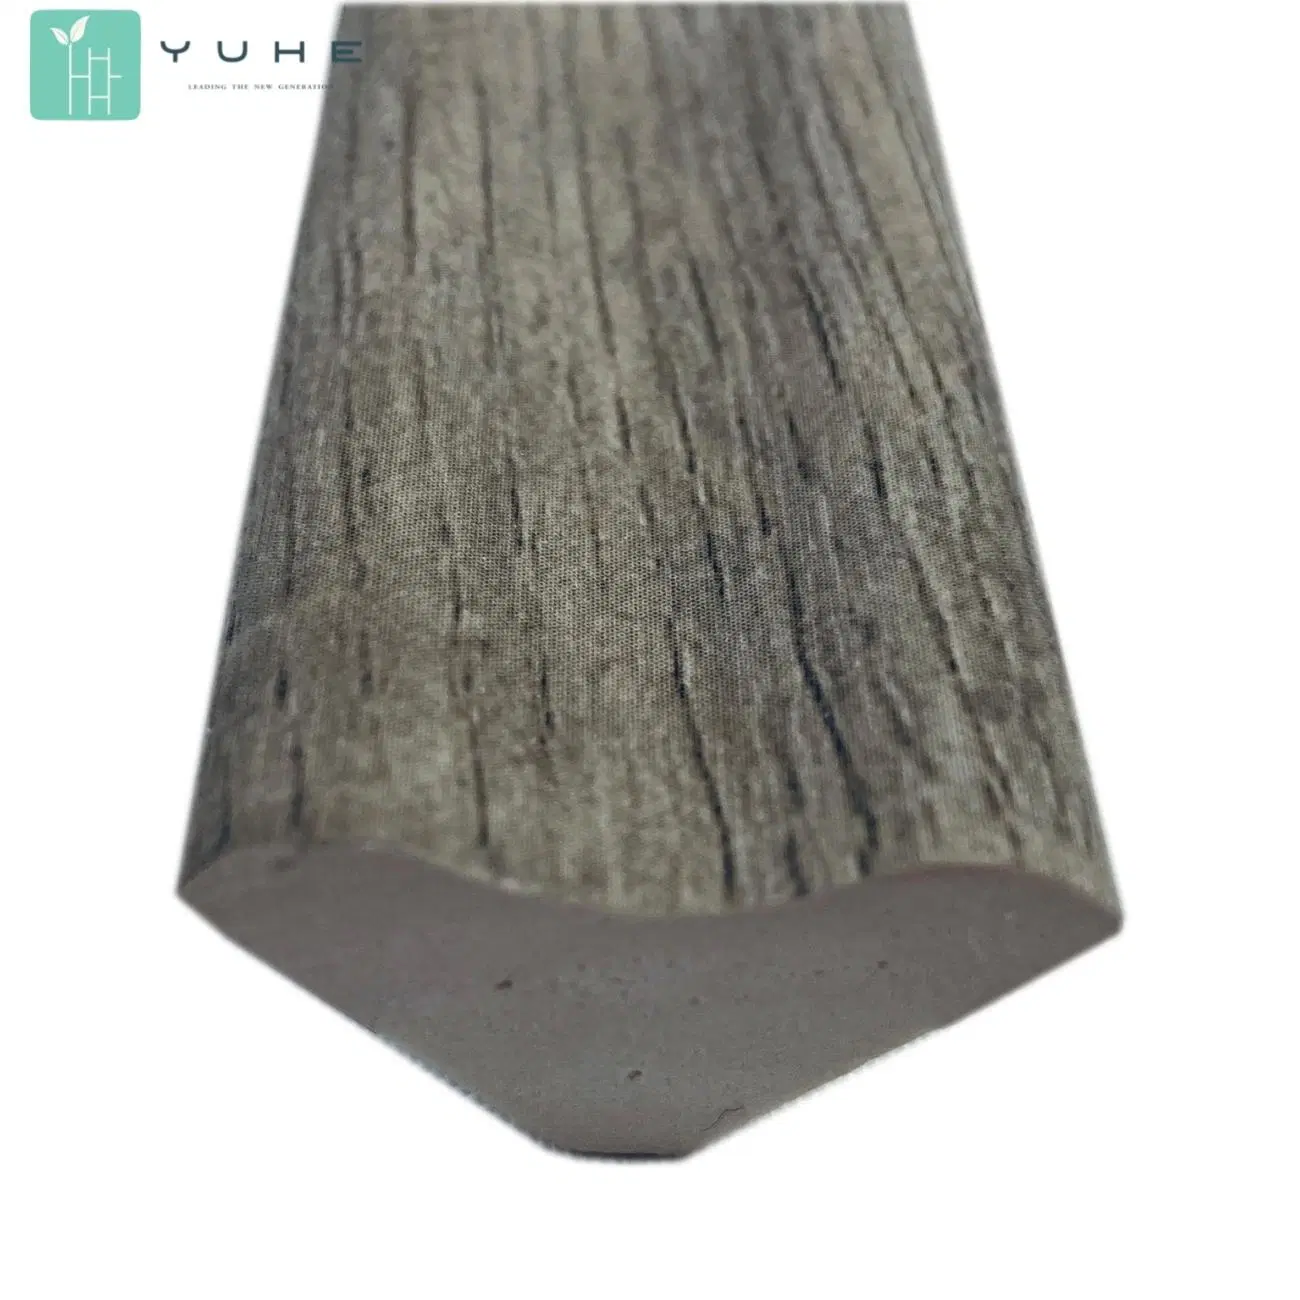 100% Waterproof/Kitchen/Bathroom/Floor Tile/Vinyl Flooring/Wood Look Tile/Spc Rigid Floor/Wall Panel/Luxury Vinyl Tile/Lvt Floor/Dry Back